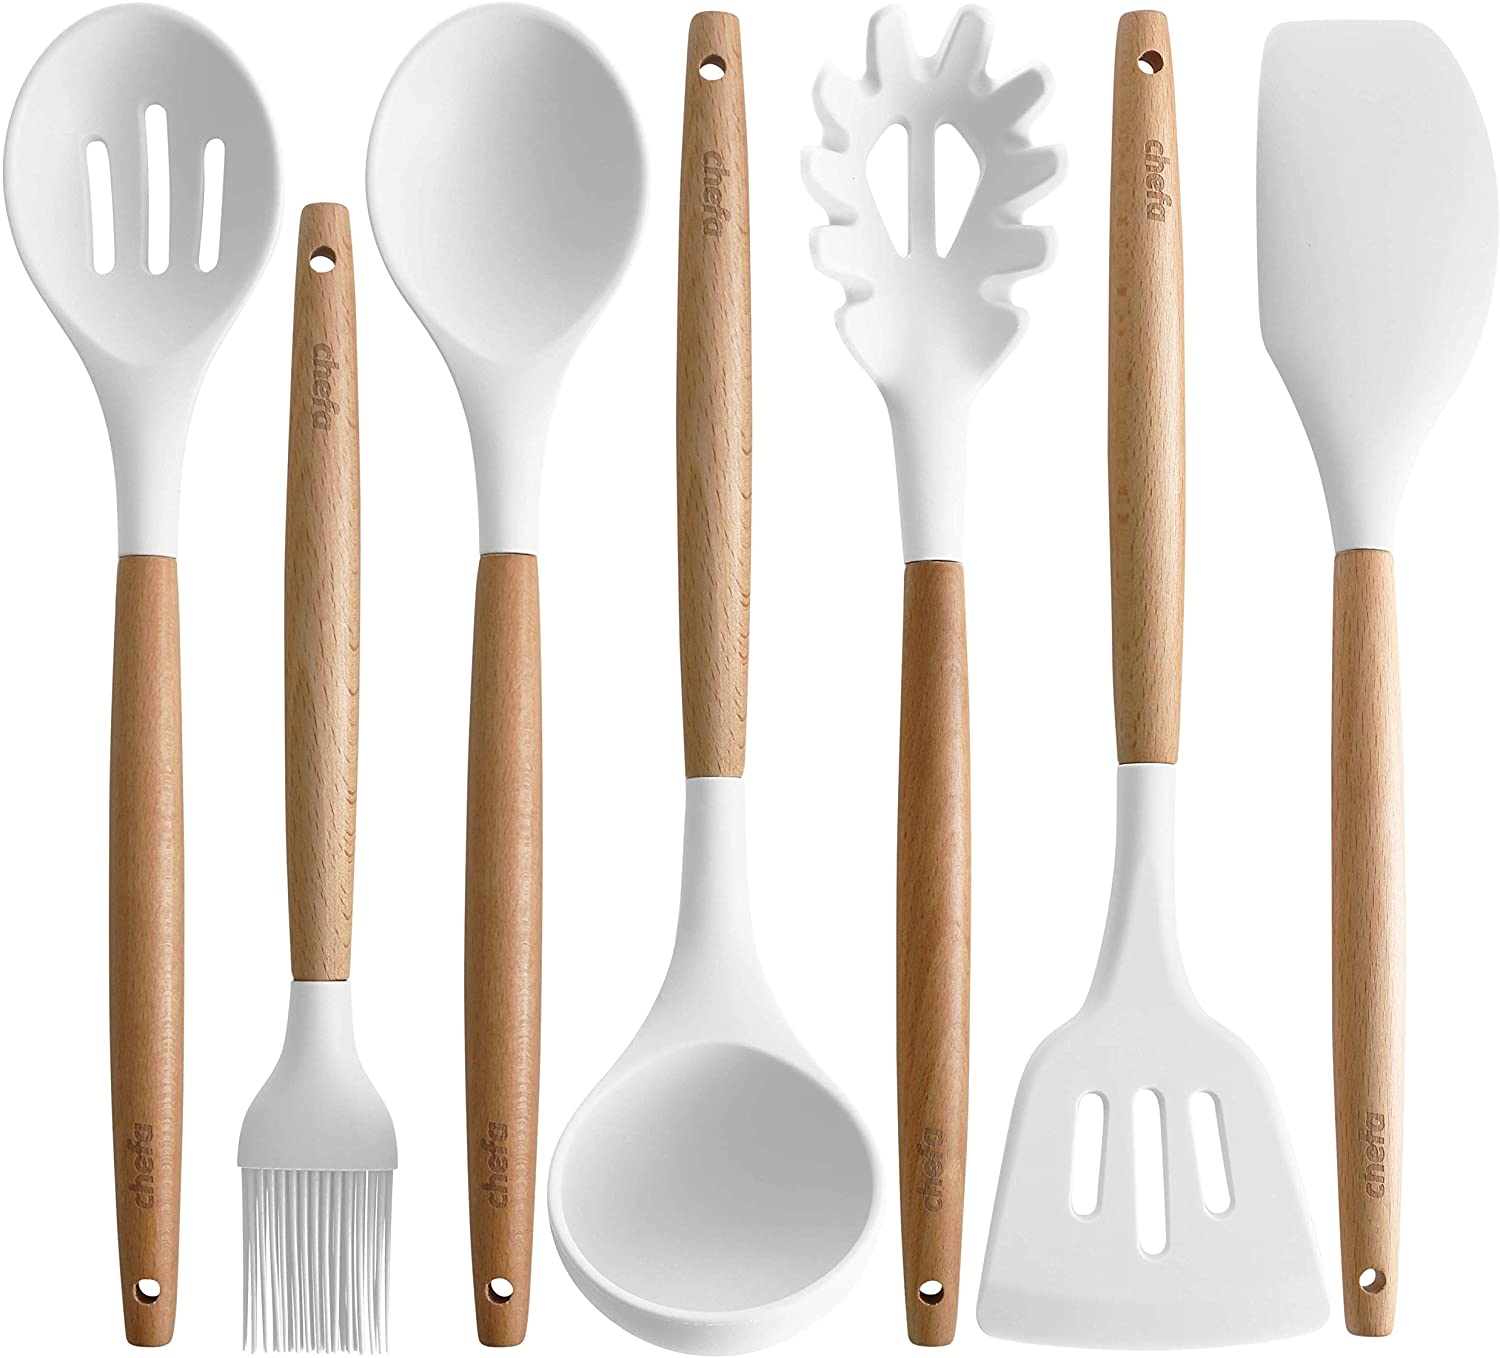 white and wooden kitchen utensil set